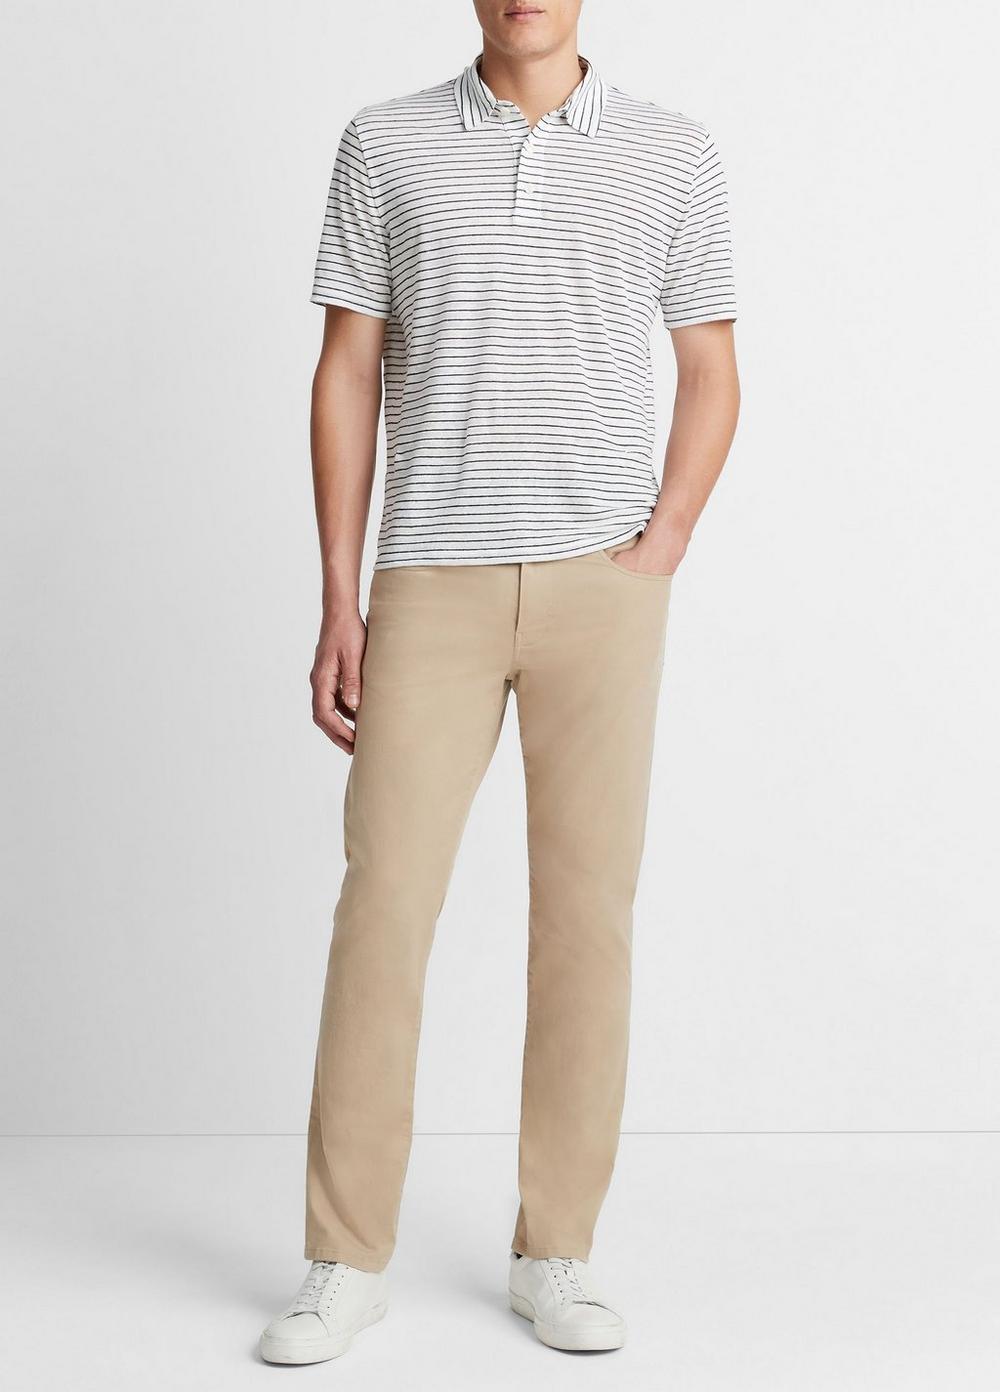 Striped Linen Short-Sleeve Polo Shirt, Optic White/coastal Blue, Size S Vince